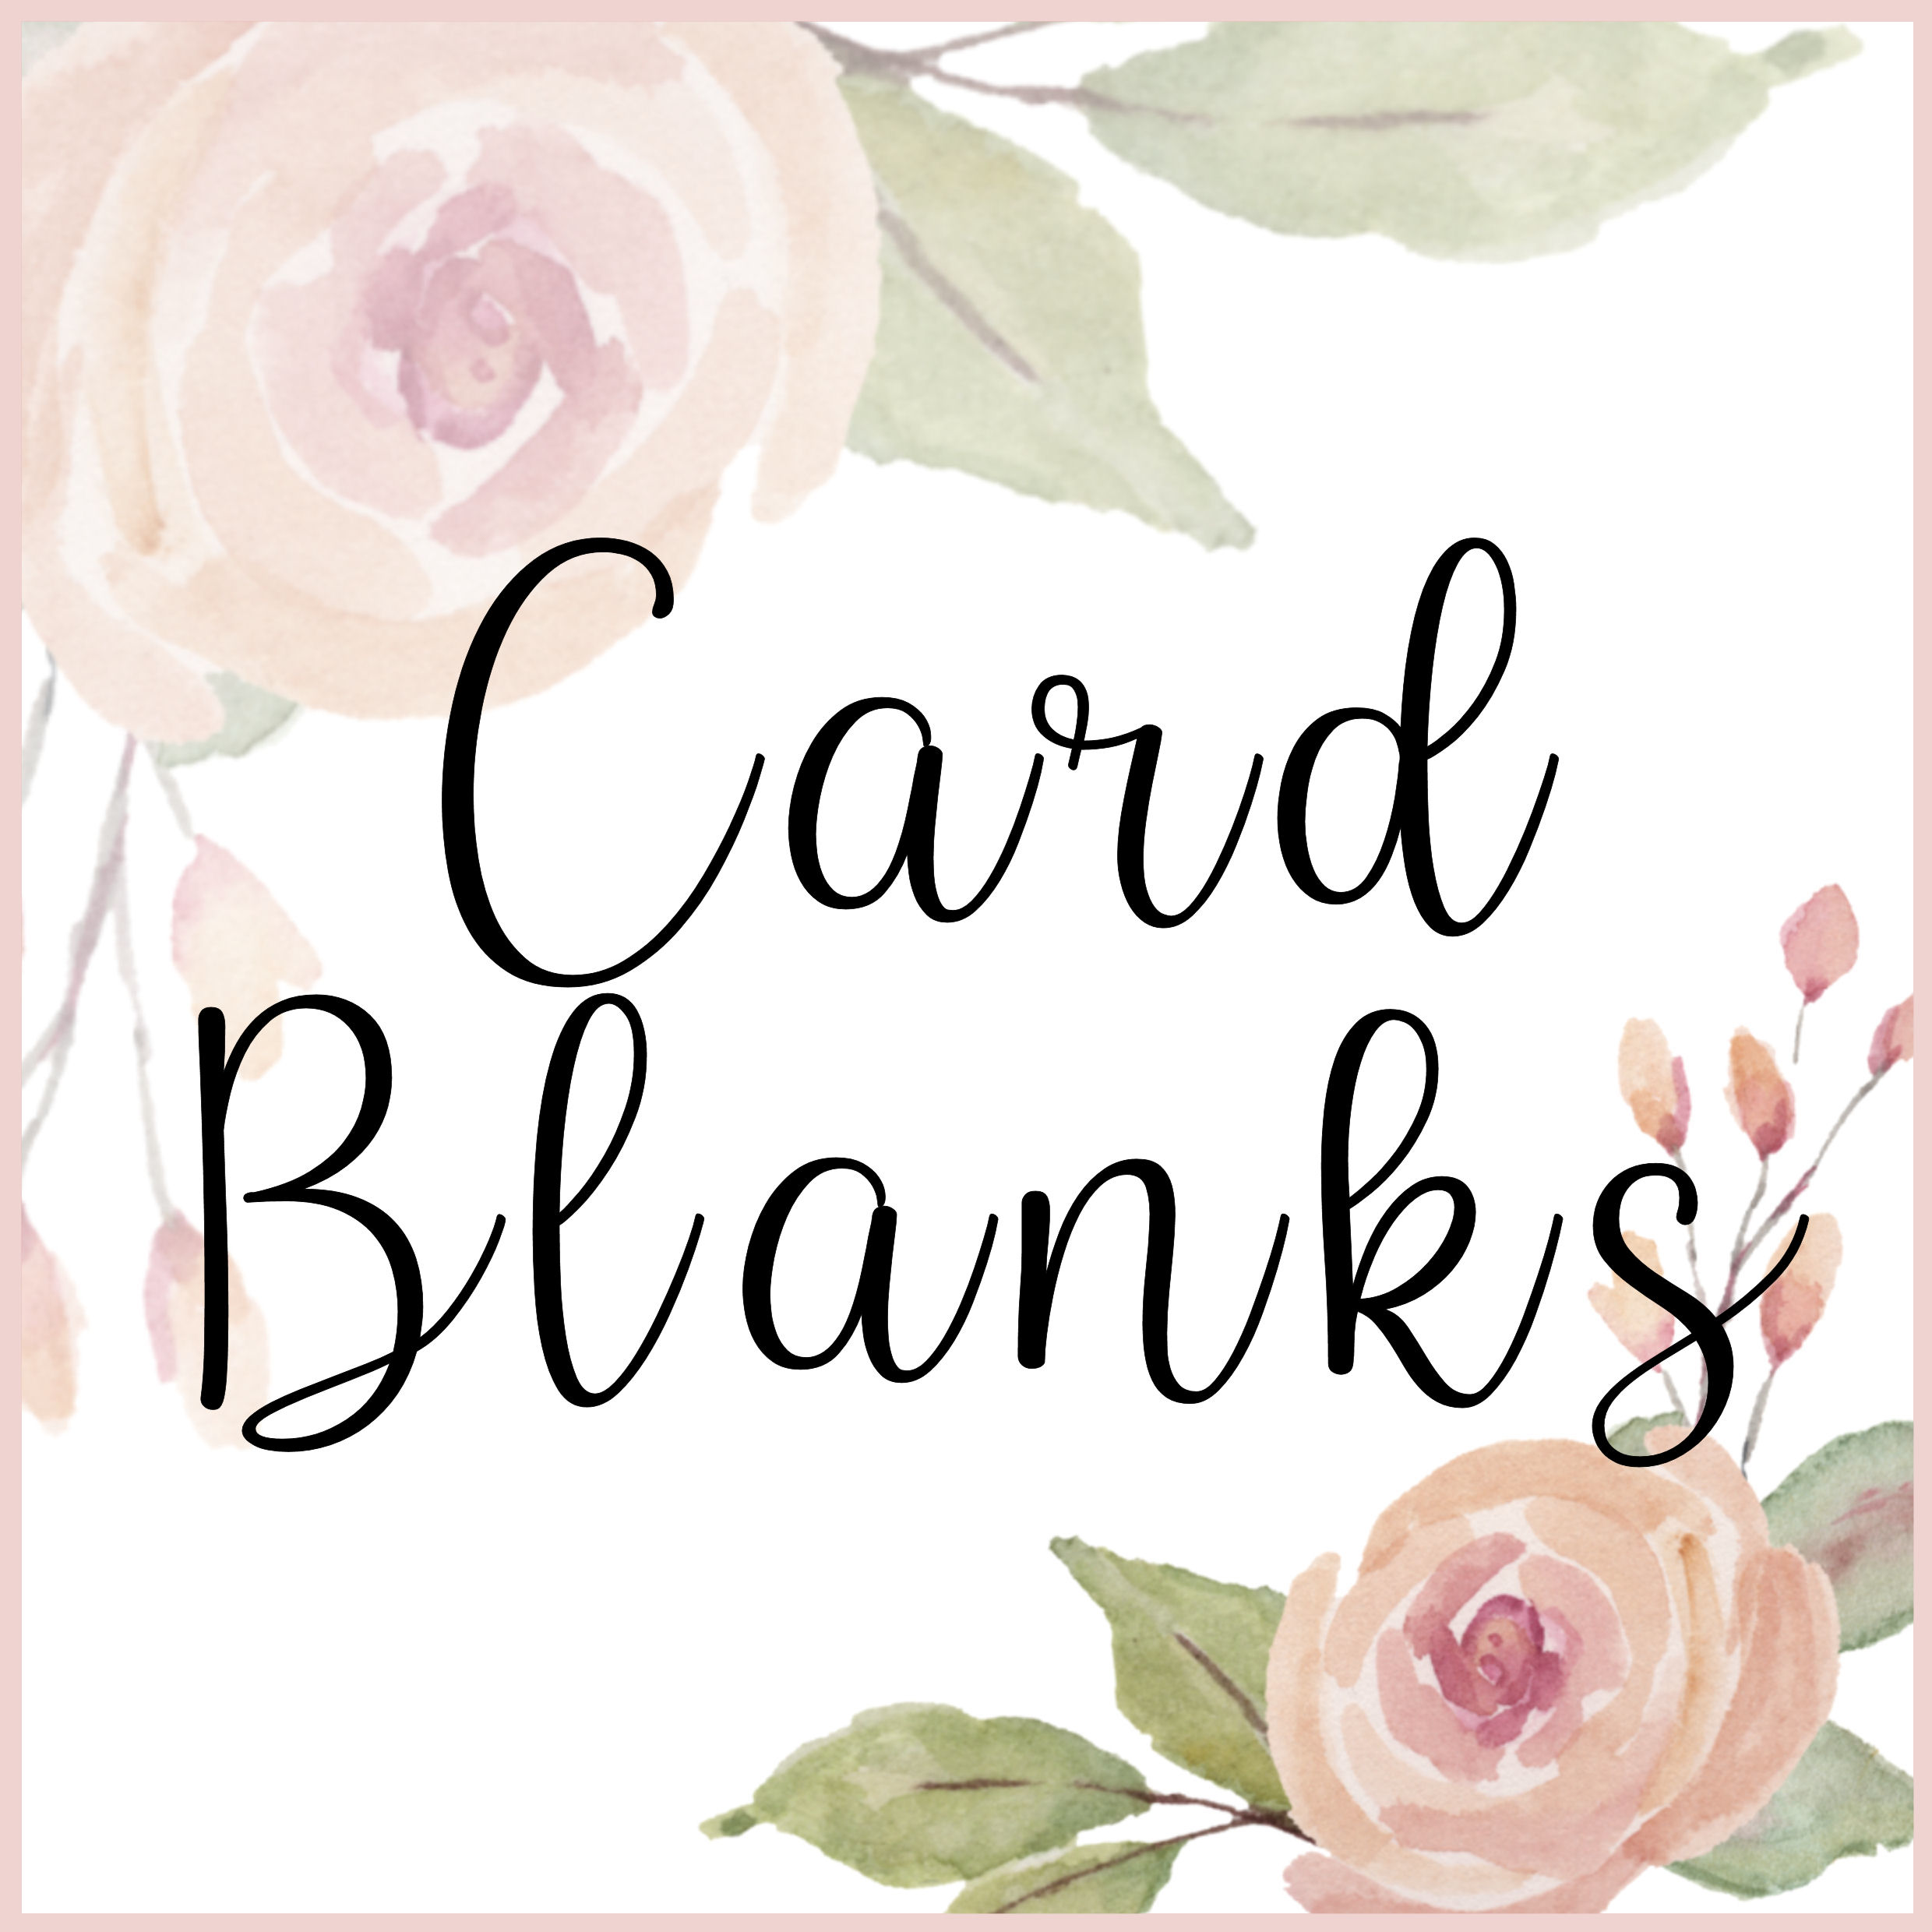 Card Blanks